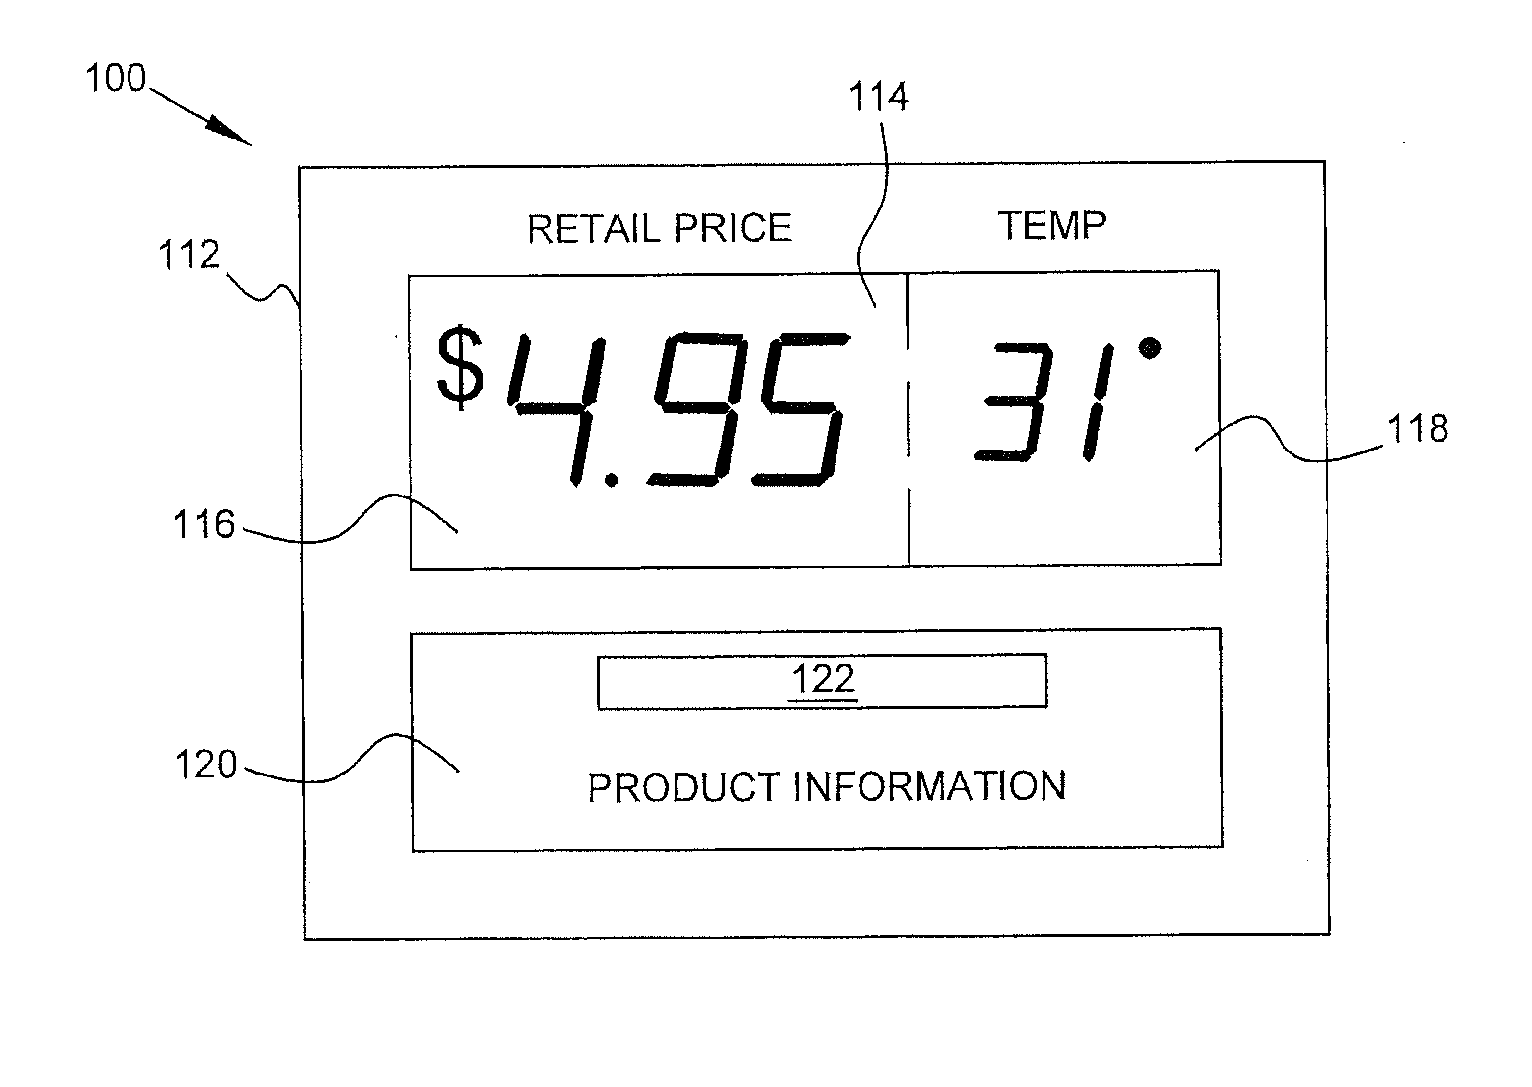 Temperature sensor for retail environments